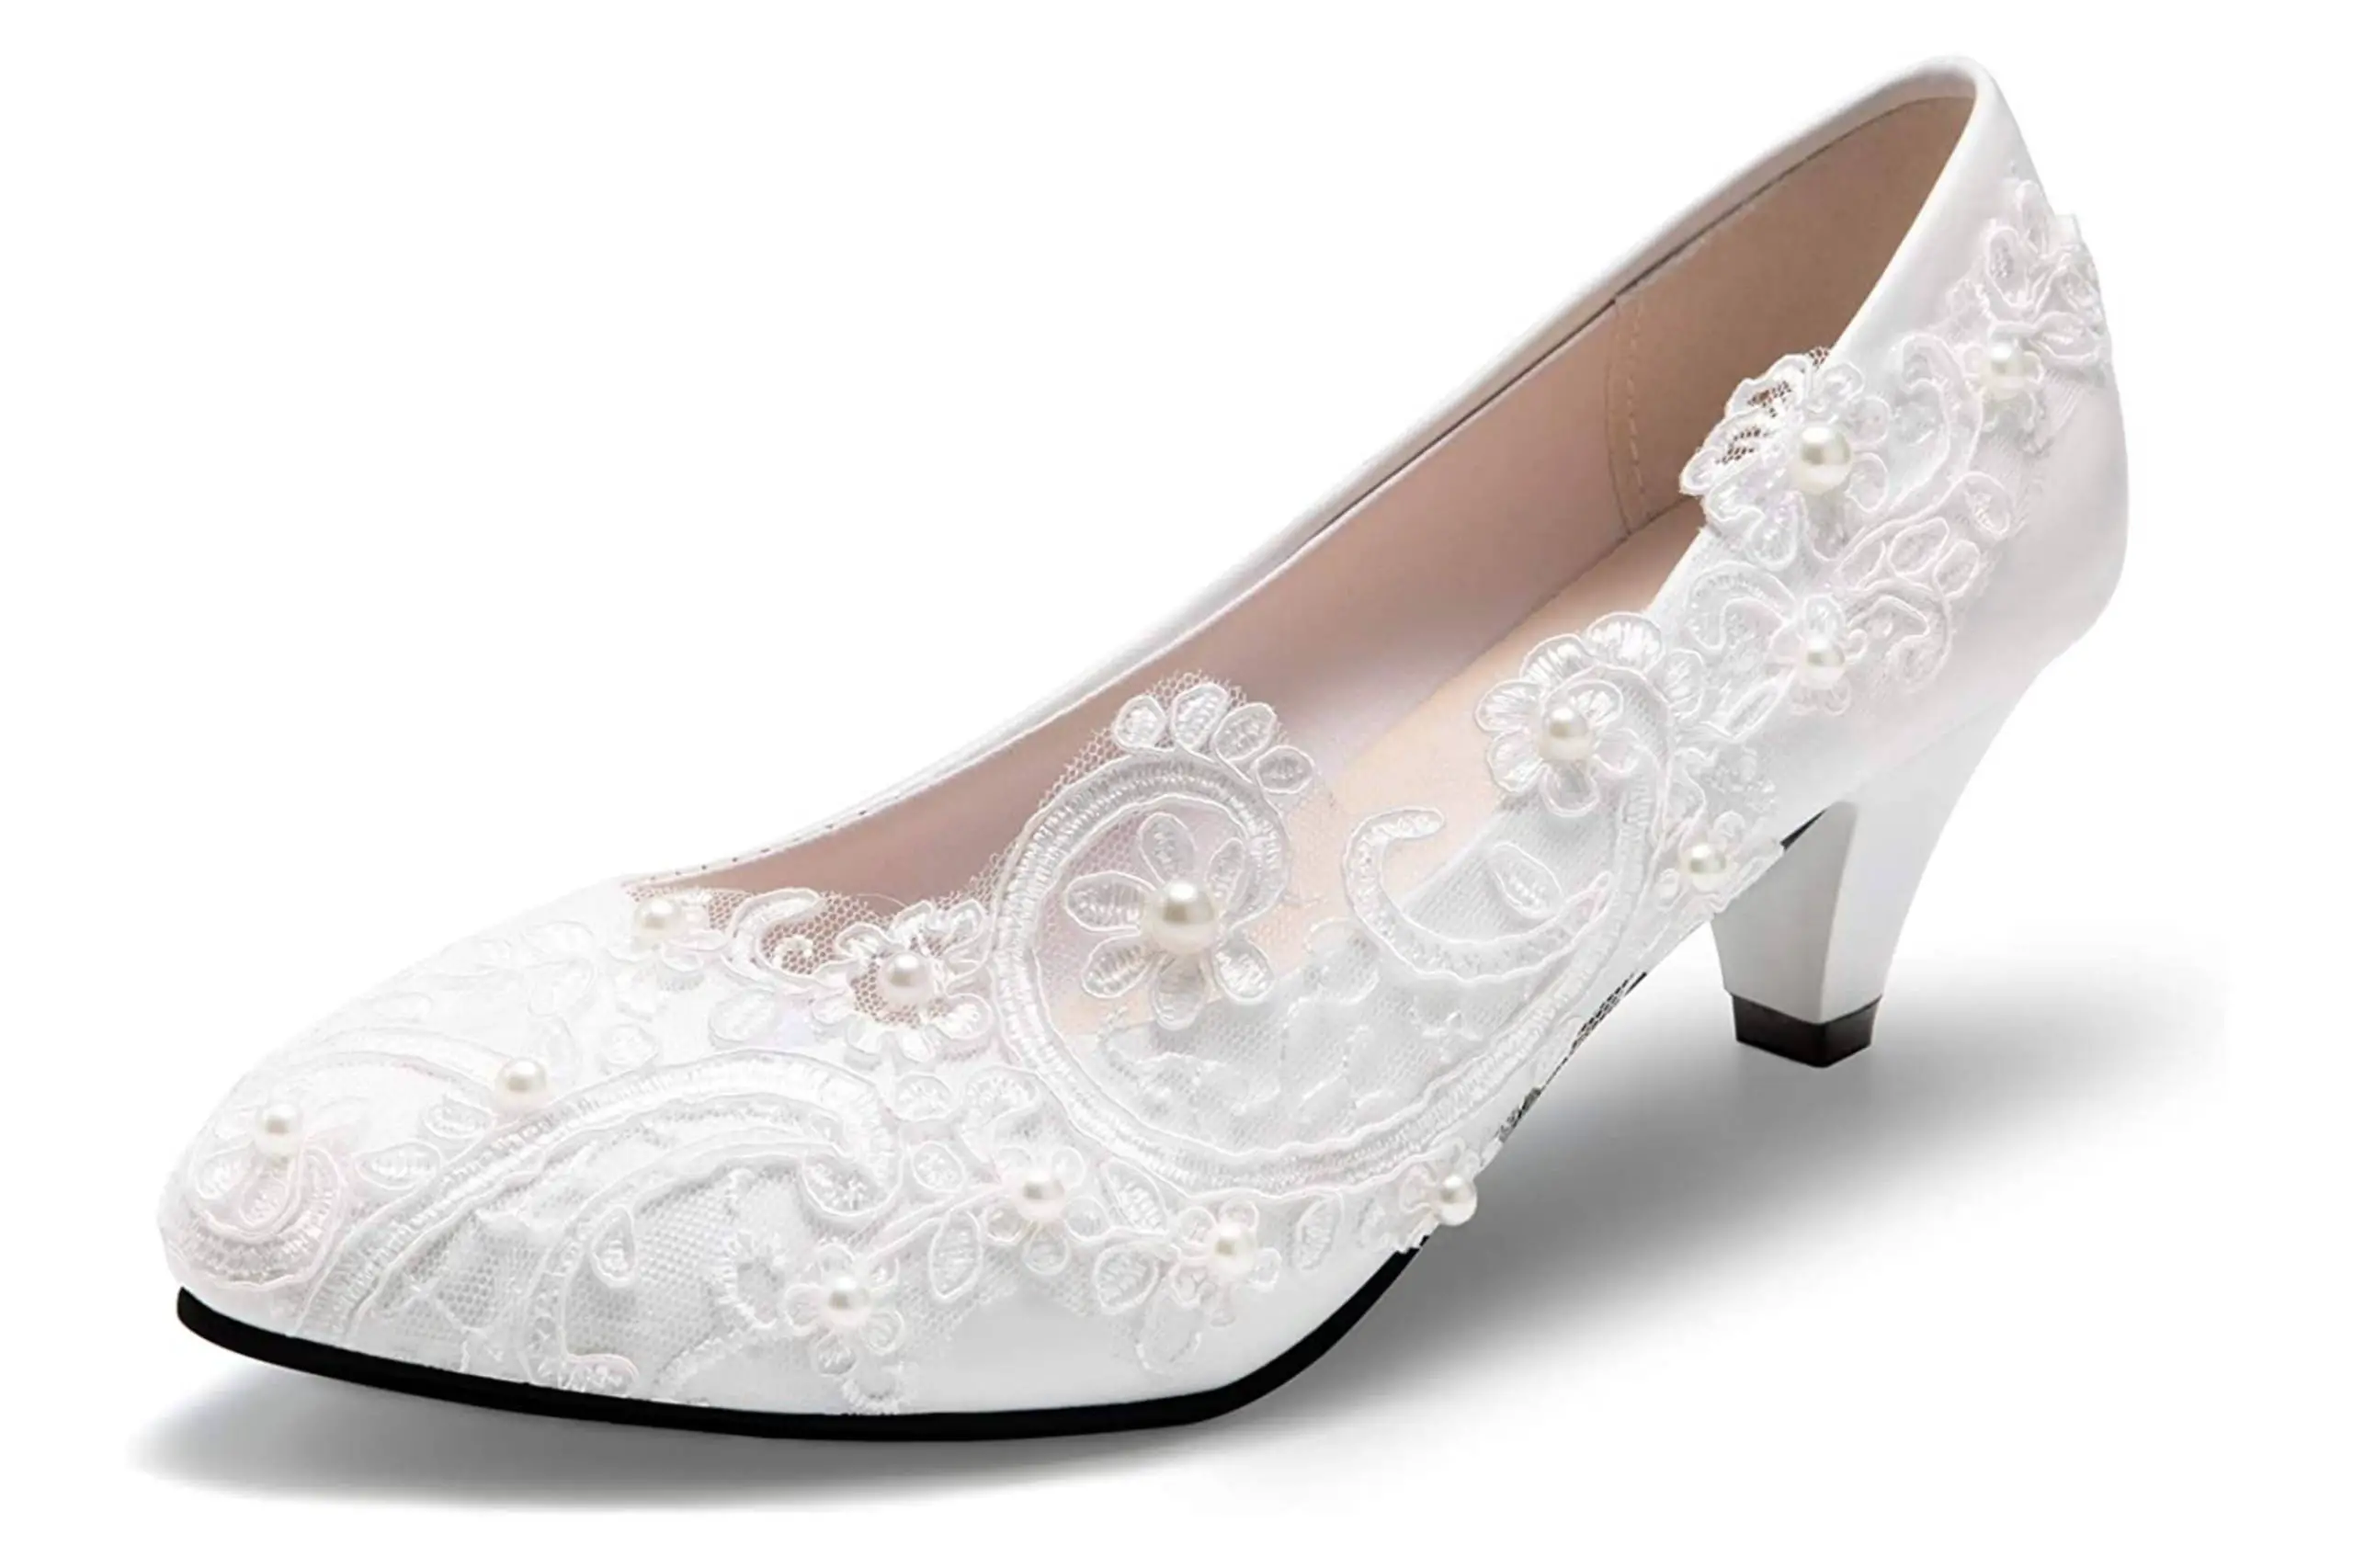 Best low heel closed toe shoe for wedding